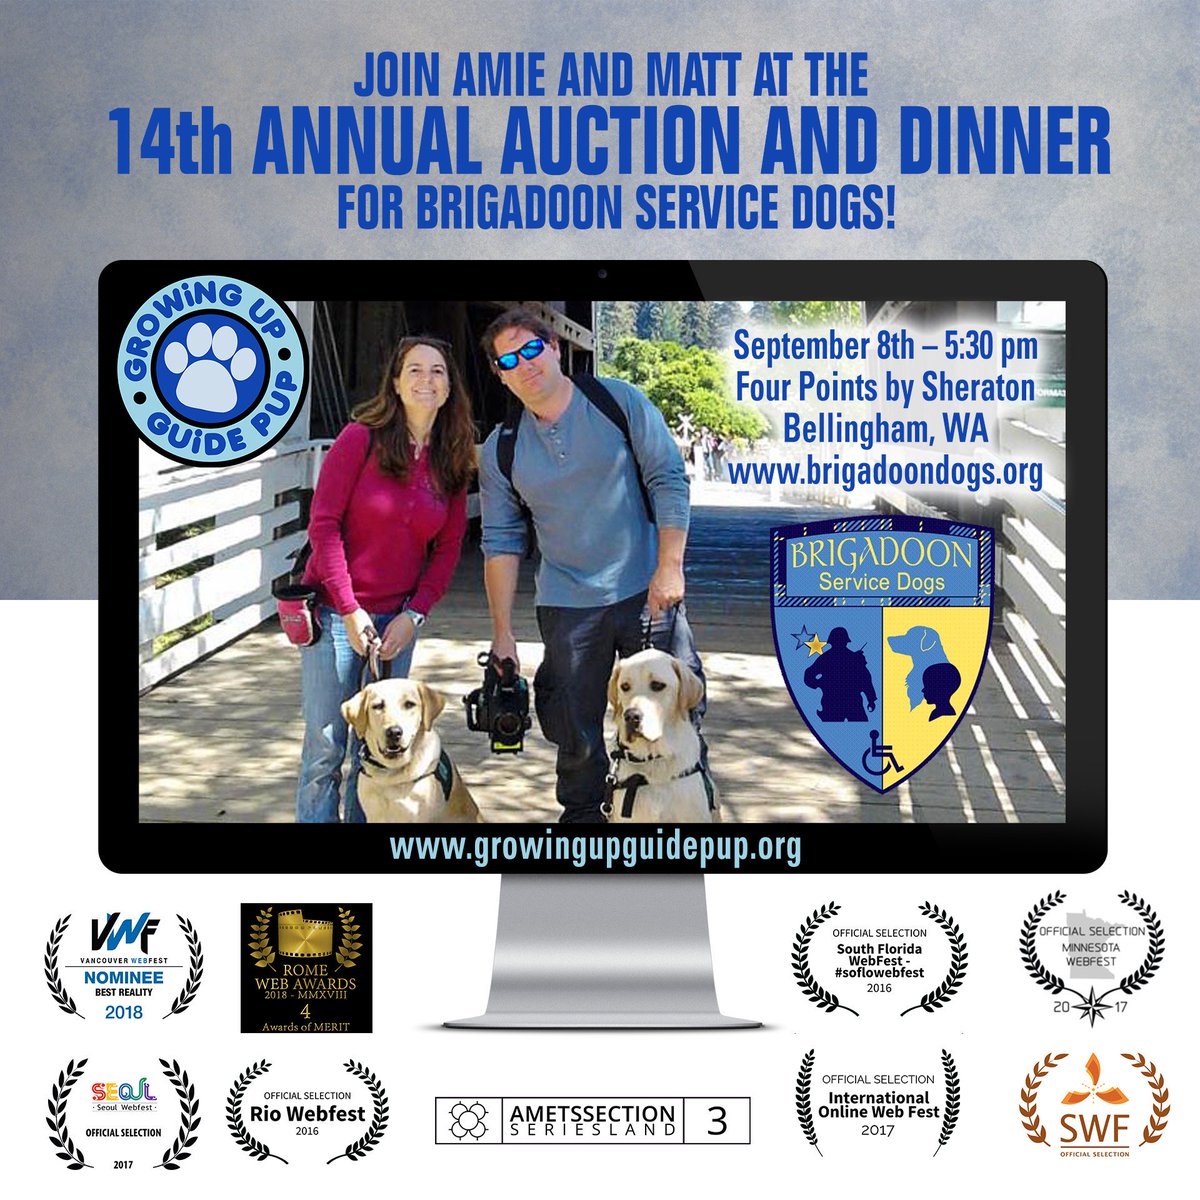 Come join us at the 14th Annual Service Dog Gala for Brigadoon Service Dogs!

#ptsddog #mobilityservicedog #hearingdog #medicalalertdog #gugp #growingupguidepup #brigadoondogs #SupportOurVeterans